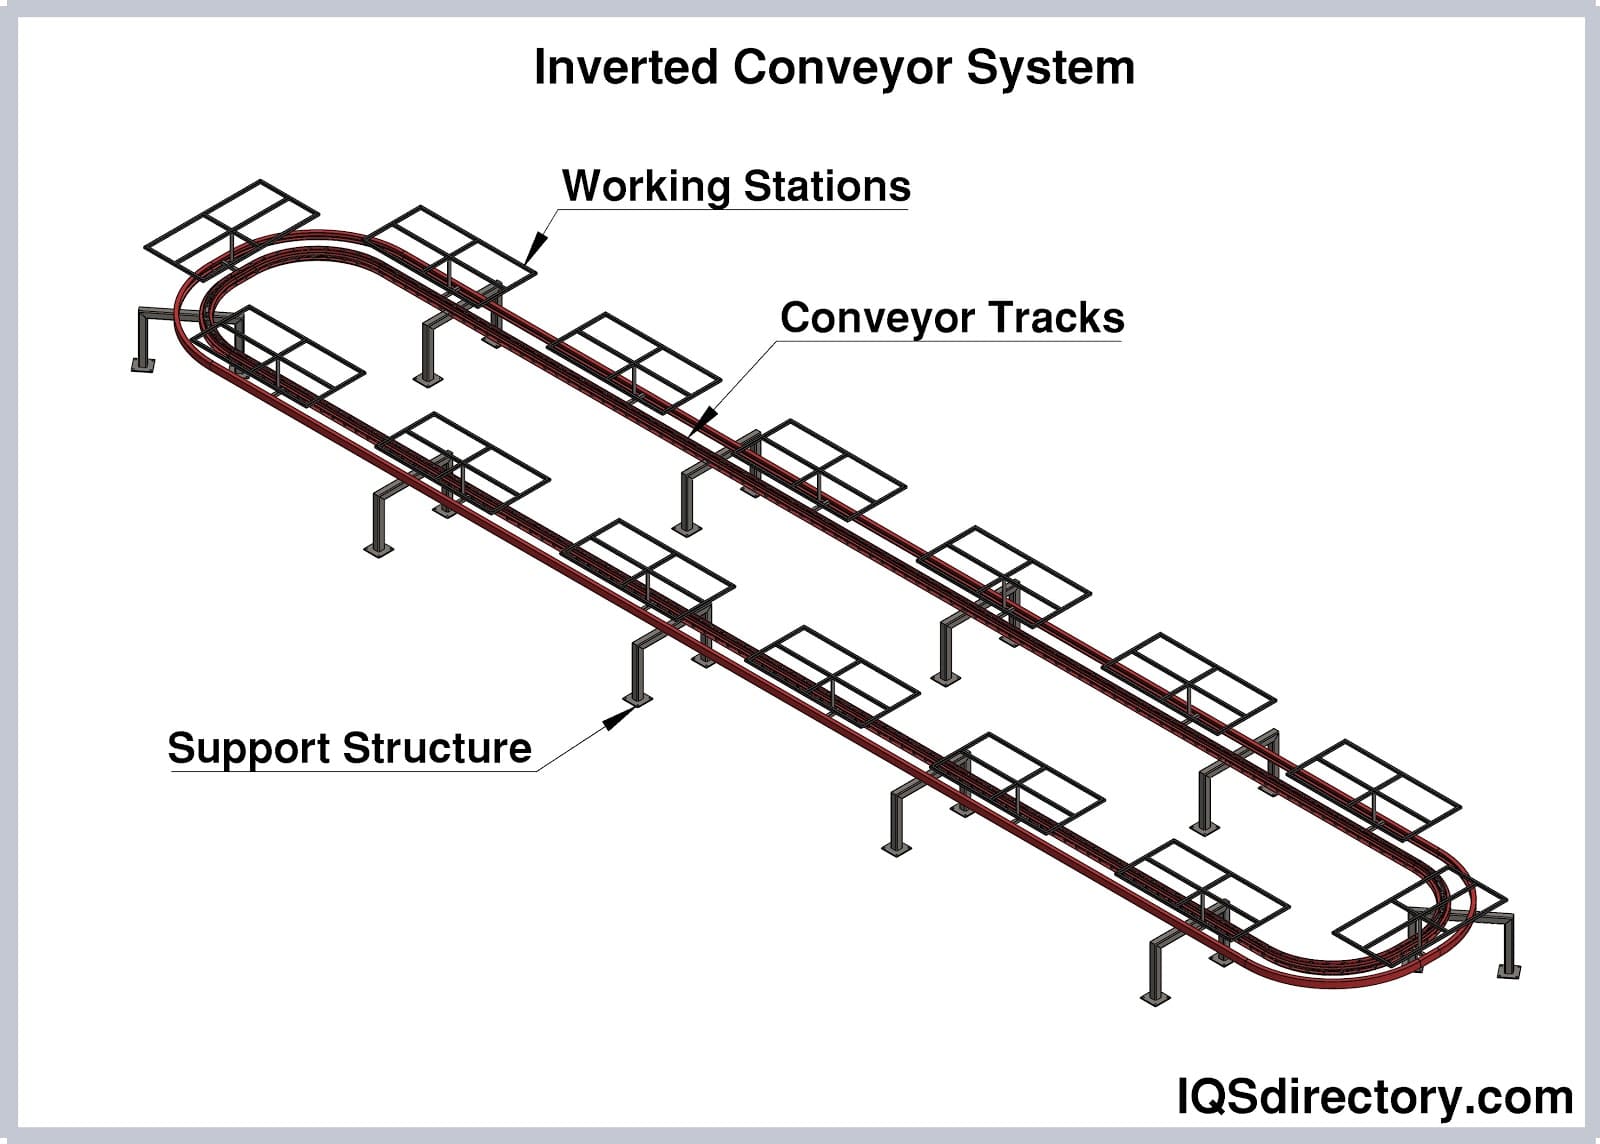 Inverted Conveyor System